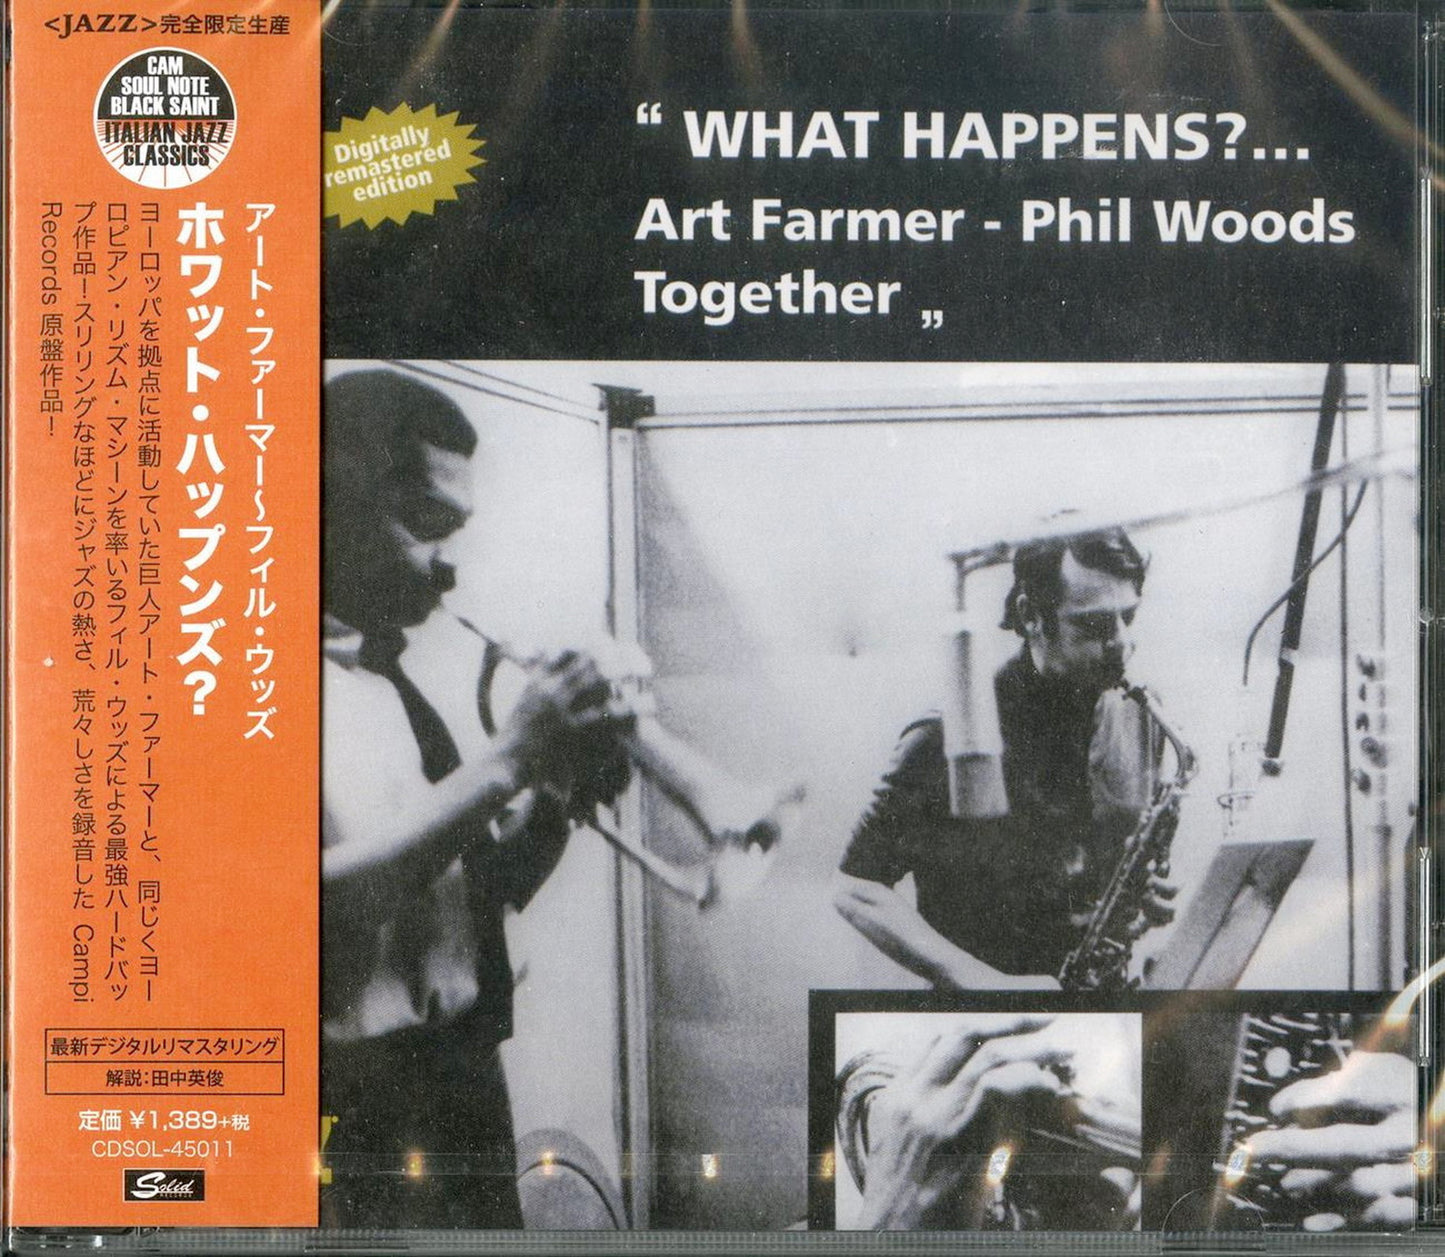 Art Farmer - Phil Woods - What Happens? - Import CD With Japan Obi